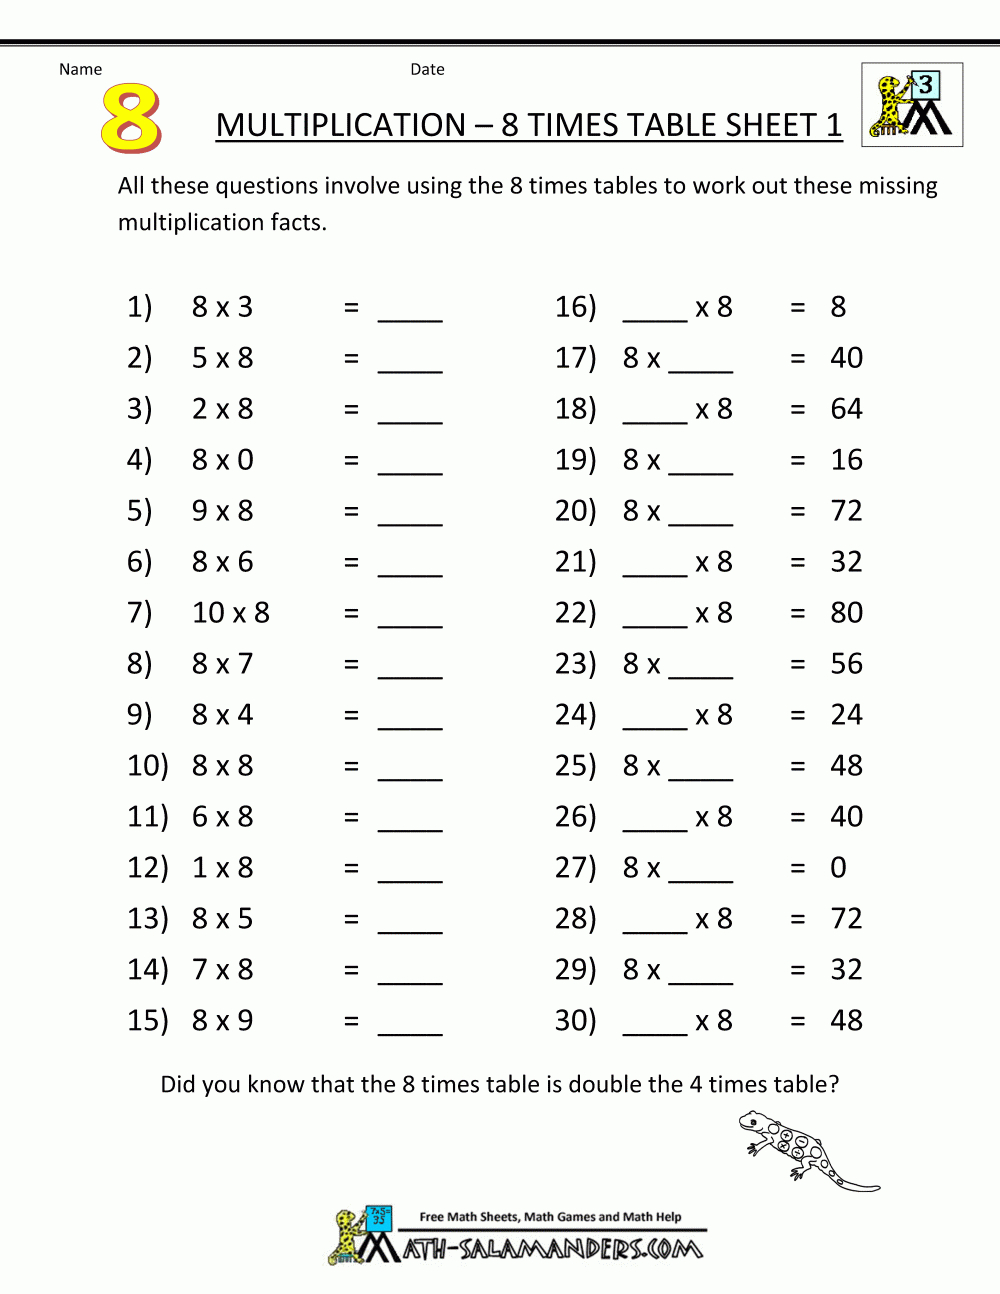 Multiplication Printable Worksheets 8 Times Table 1 | Education And - Free Printable Math Worksheets For 3Rd Grade